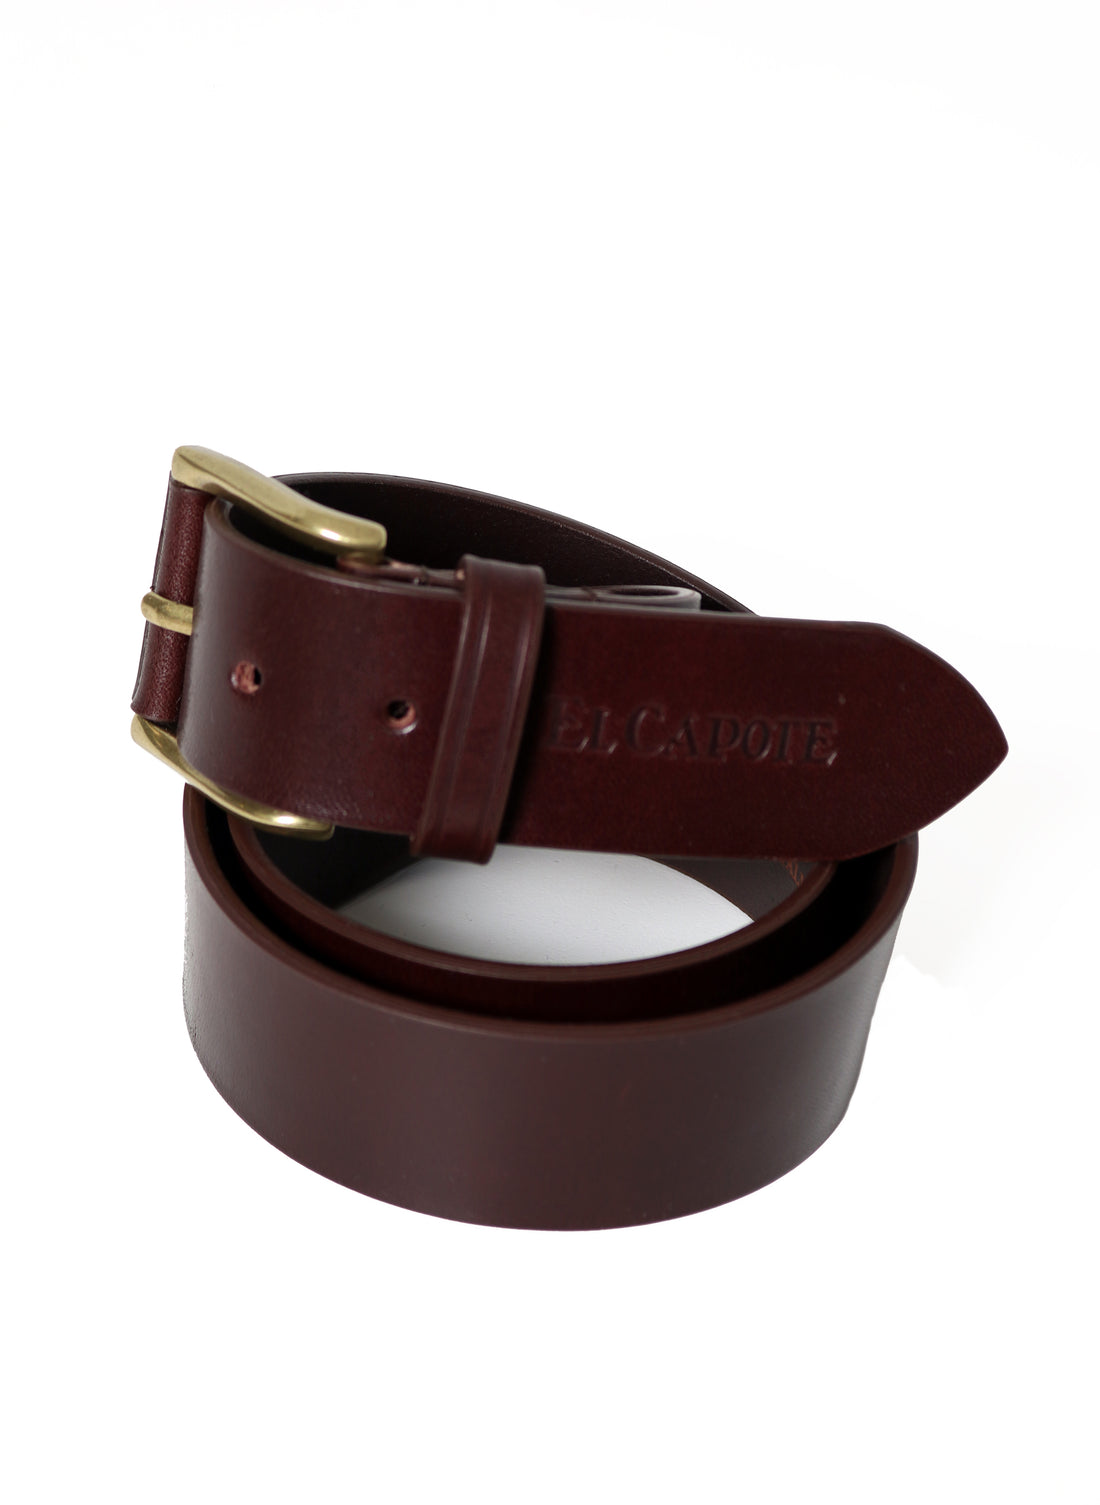 Foncé leather seal ceinture